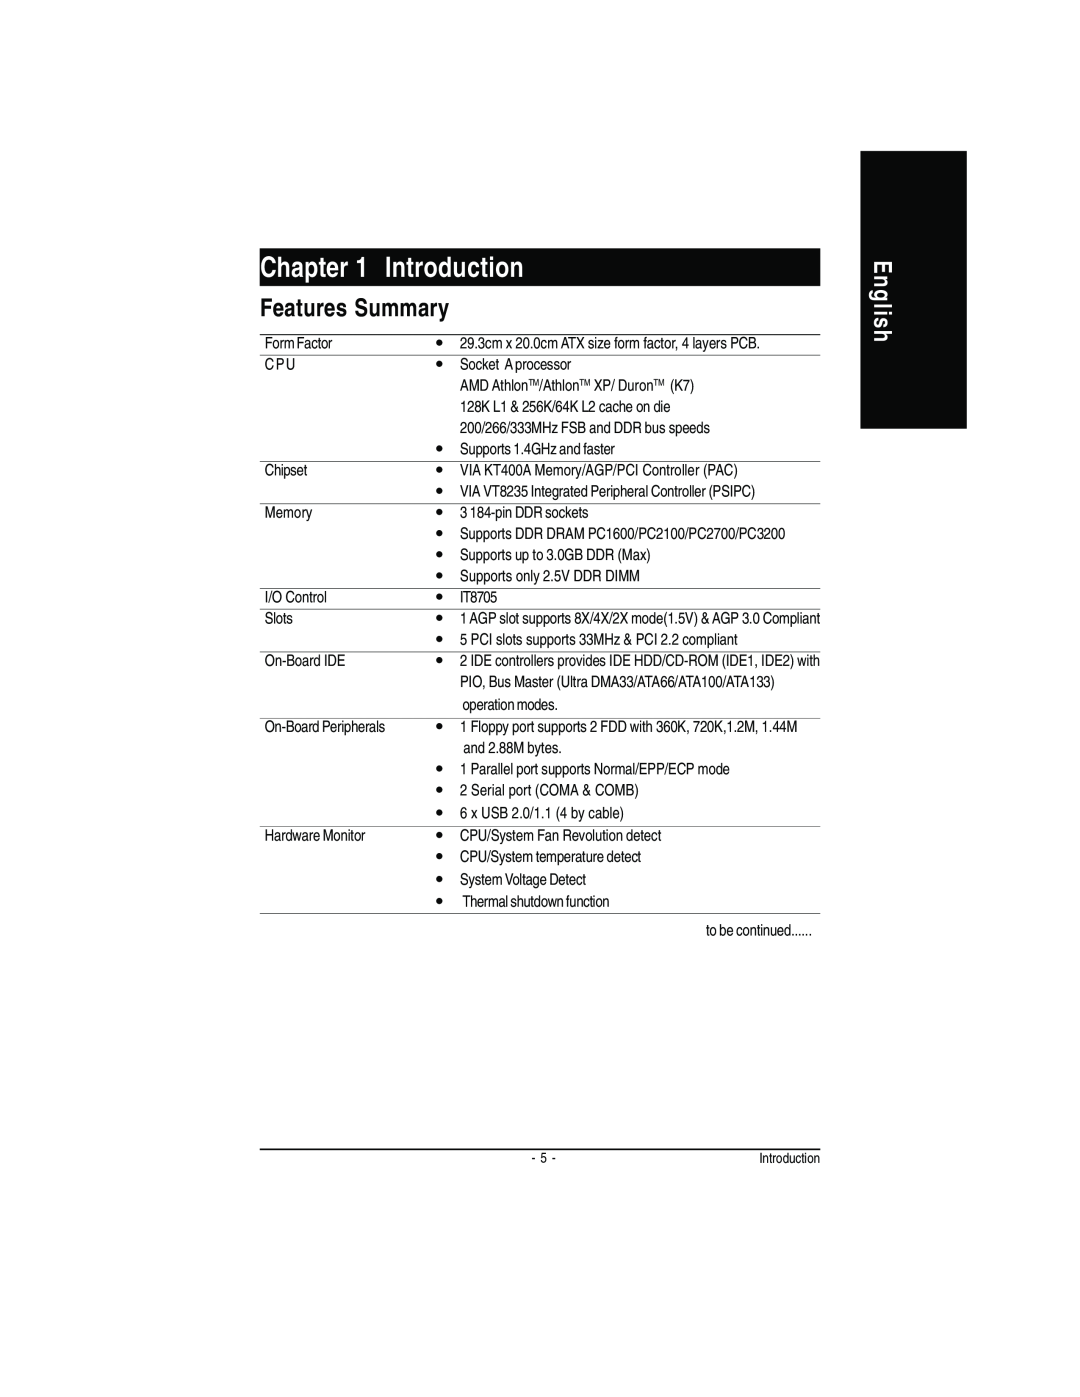 Gigabyte GA-7VA manual Introduction, Features Summary, English 